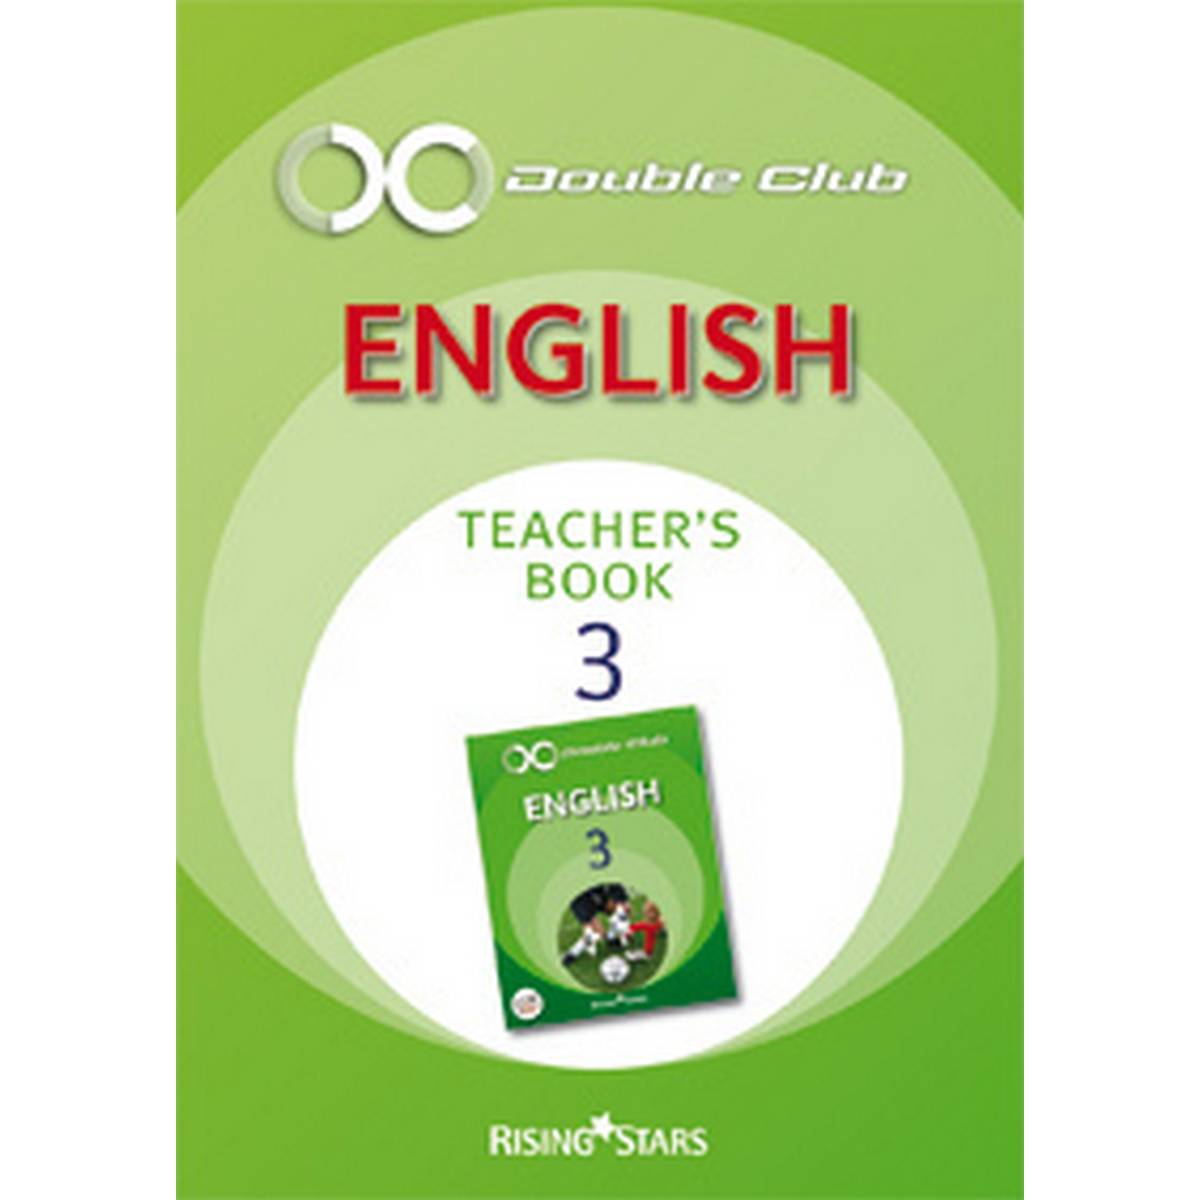 Double Club English Teacher's Book 3